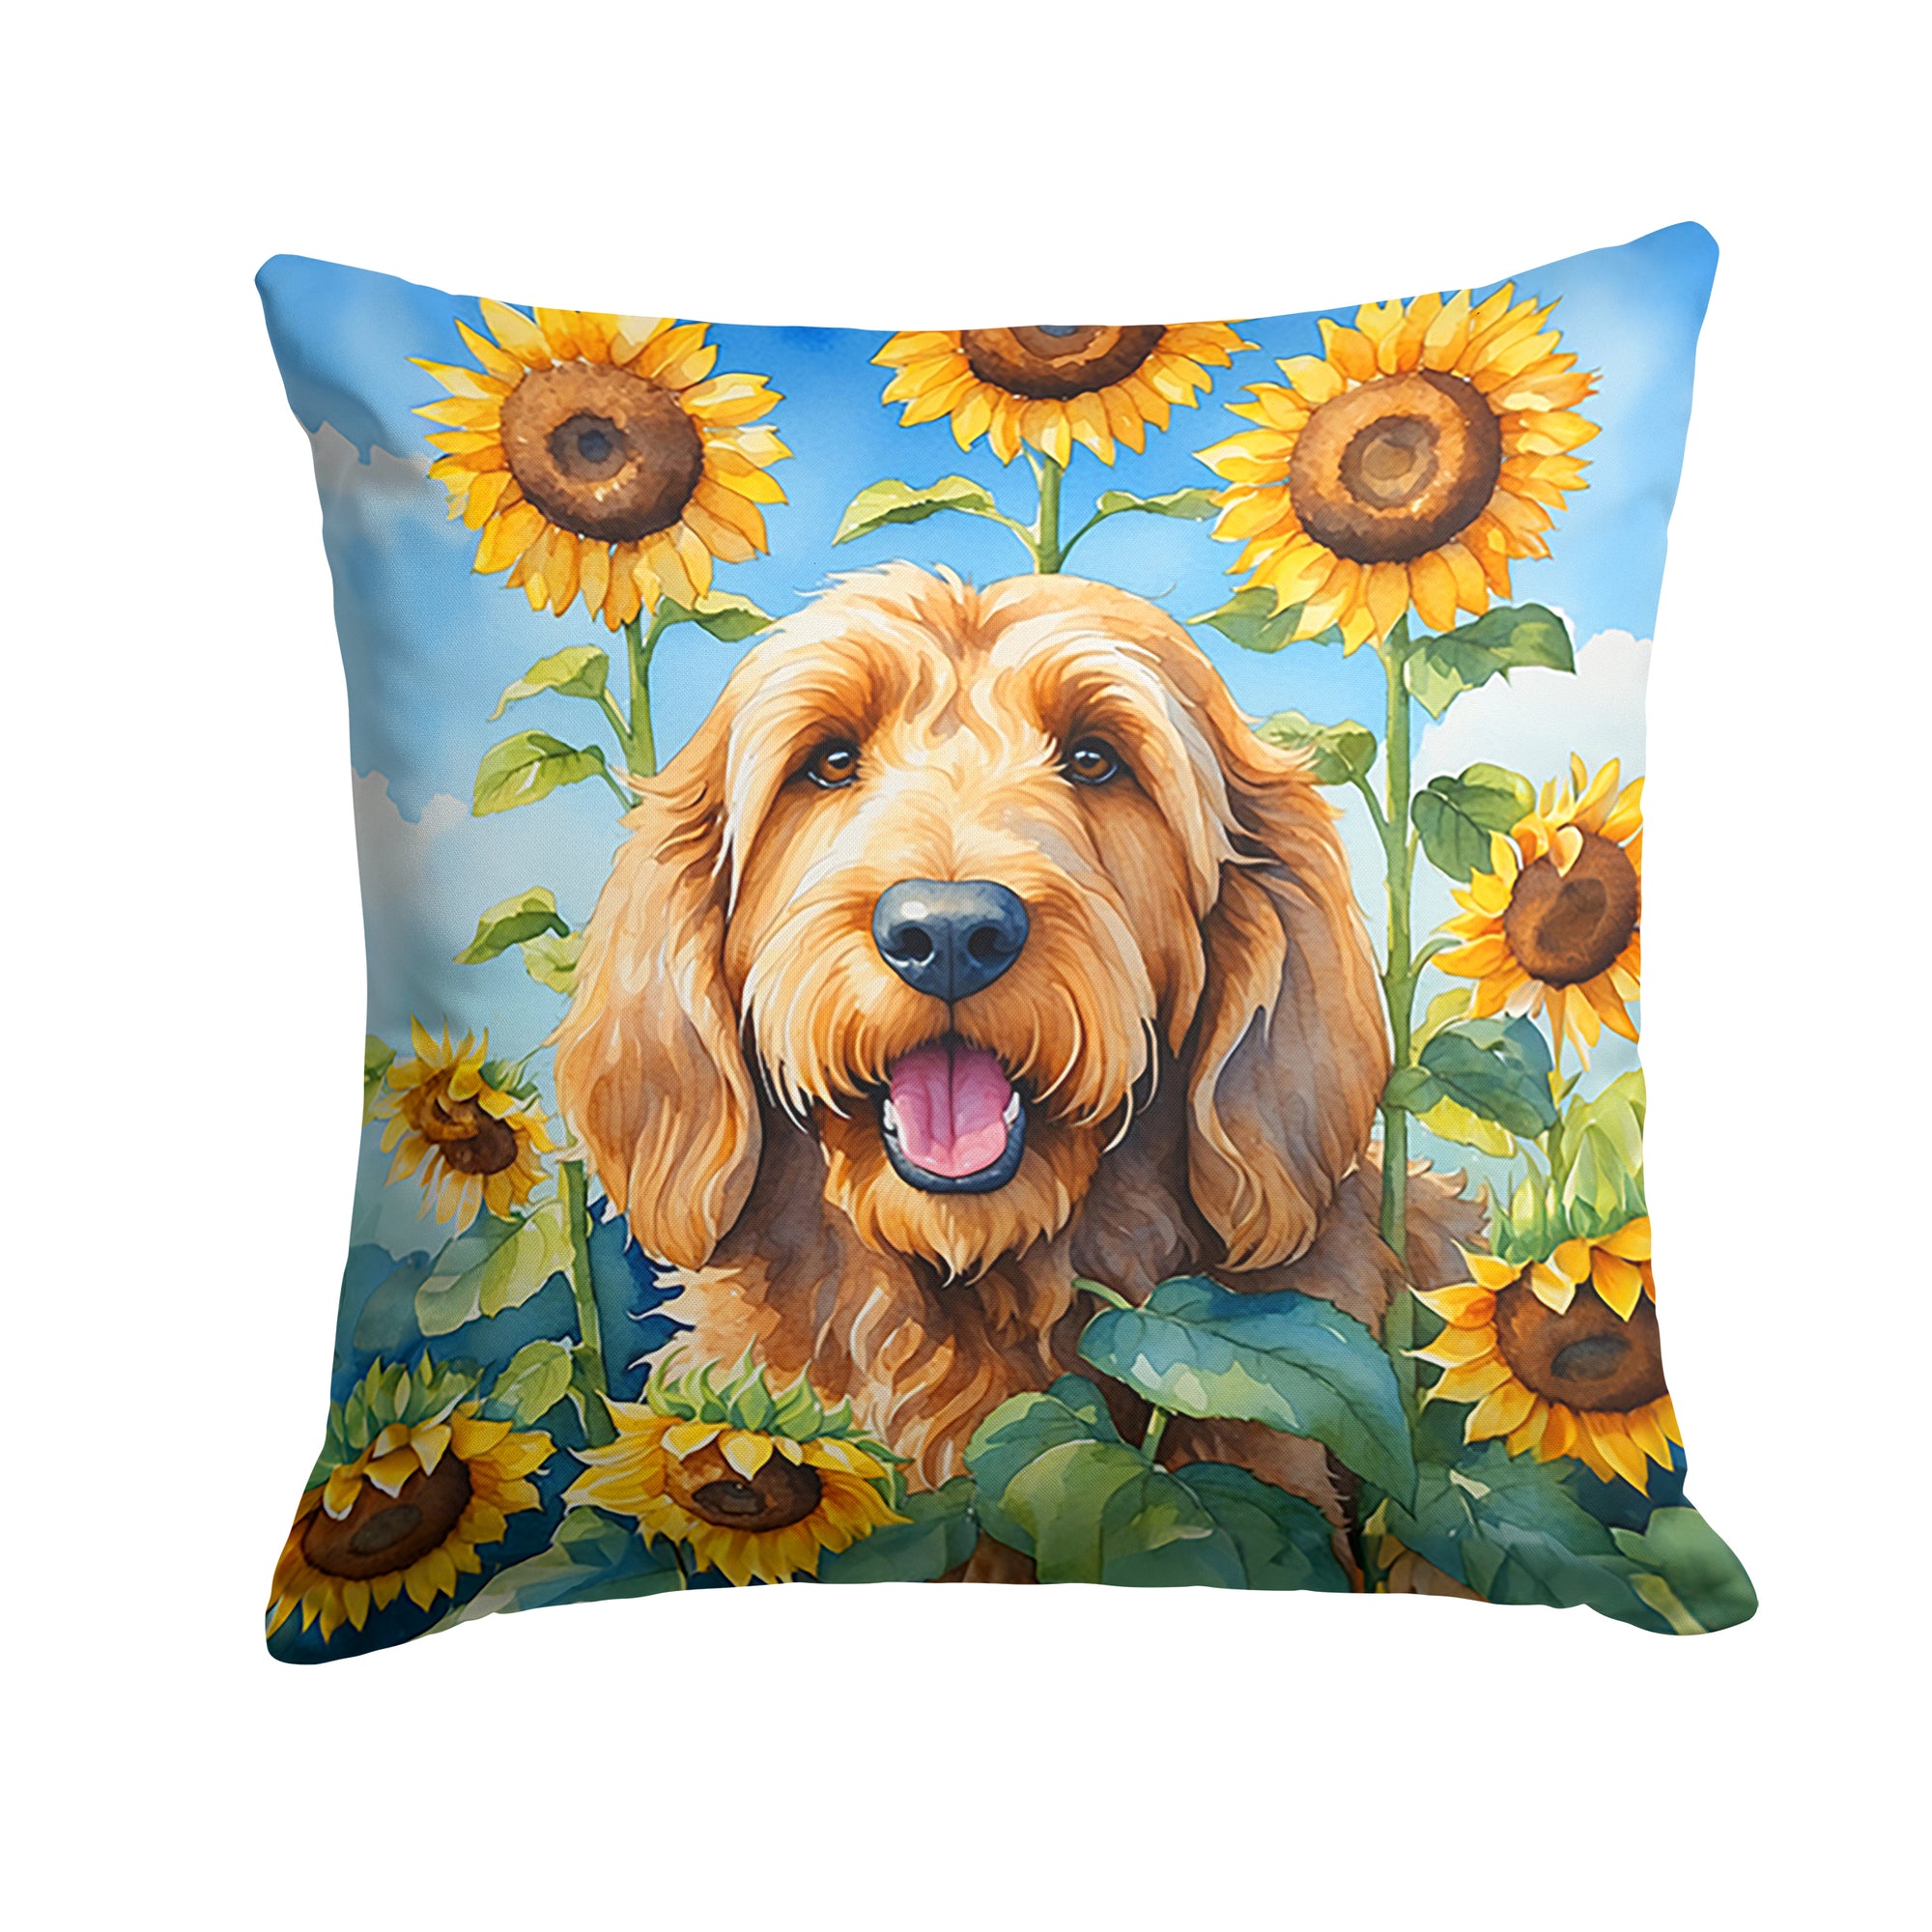 Buy this Otterhound in Sunflowers Throw Pillow